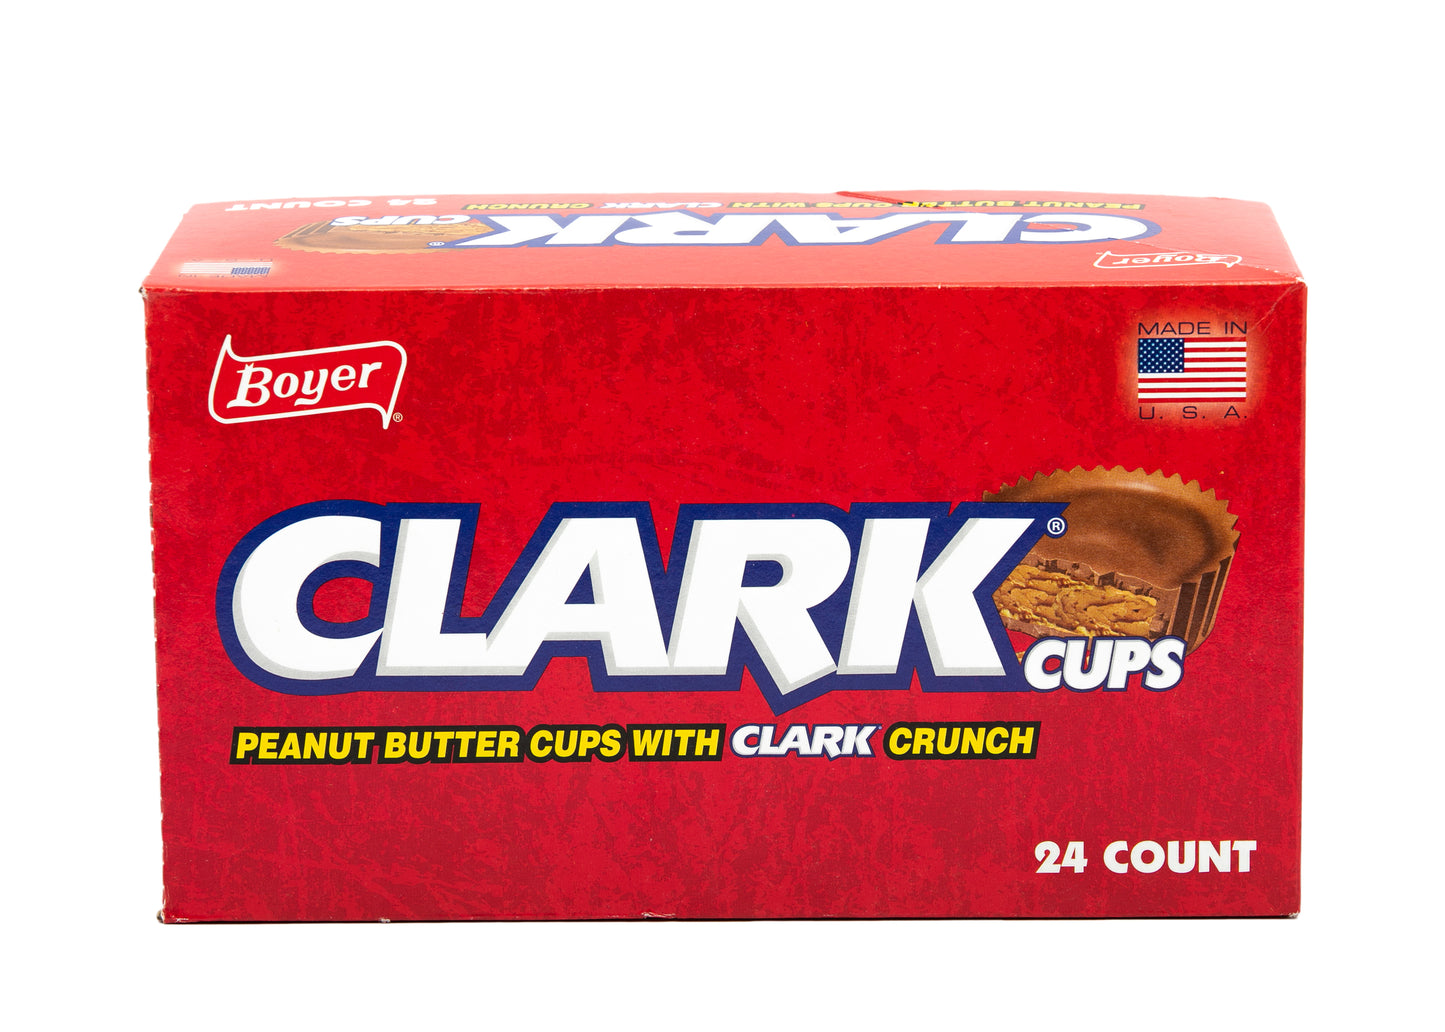 Clark Cups - 24 count box